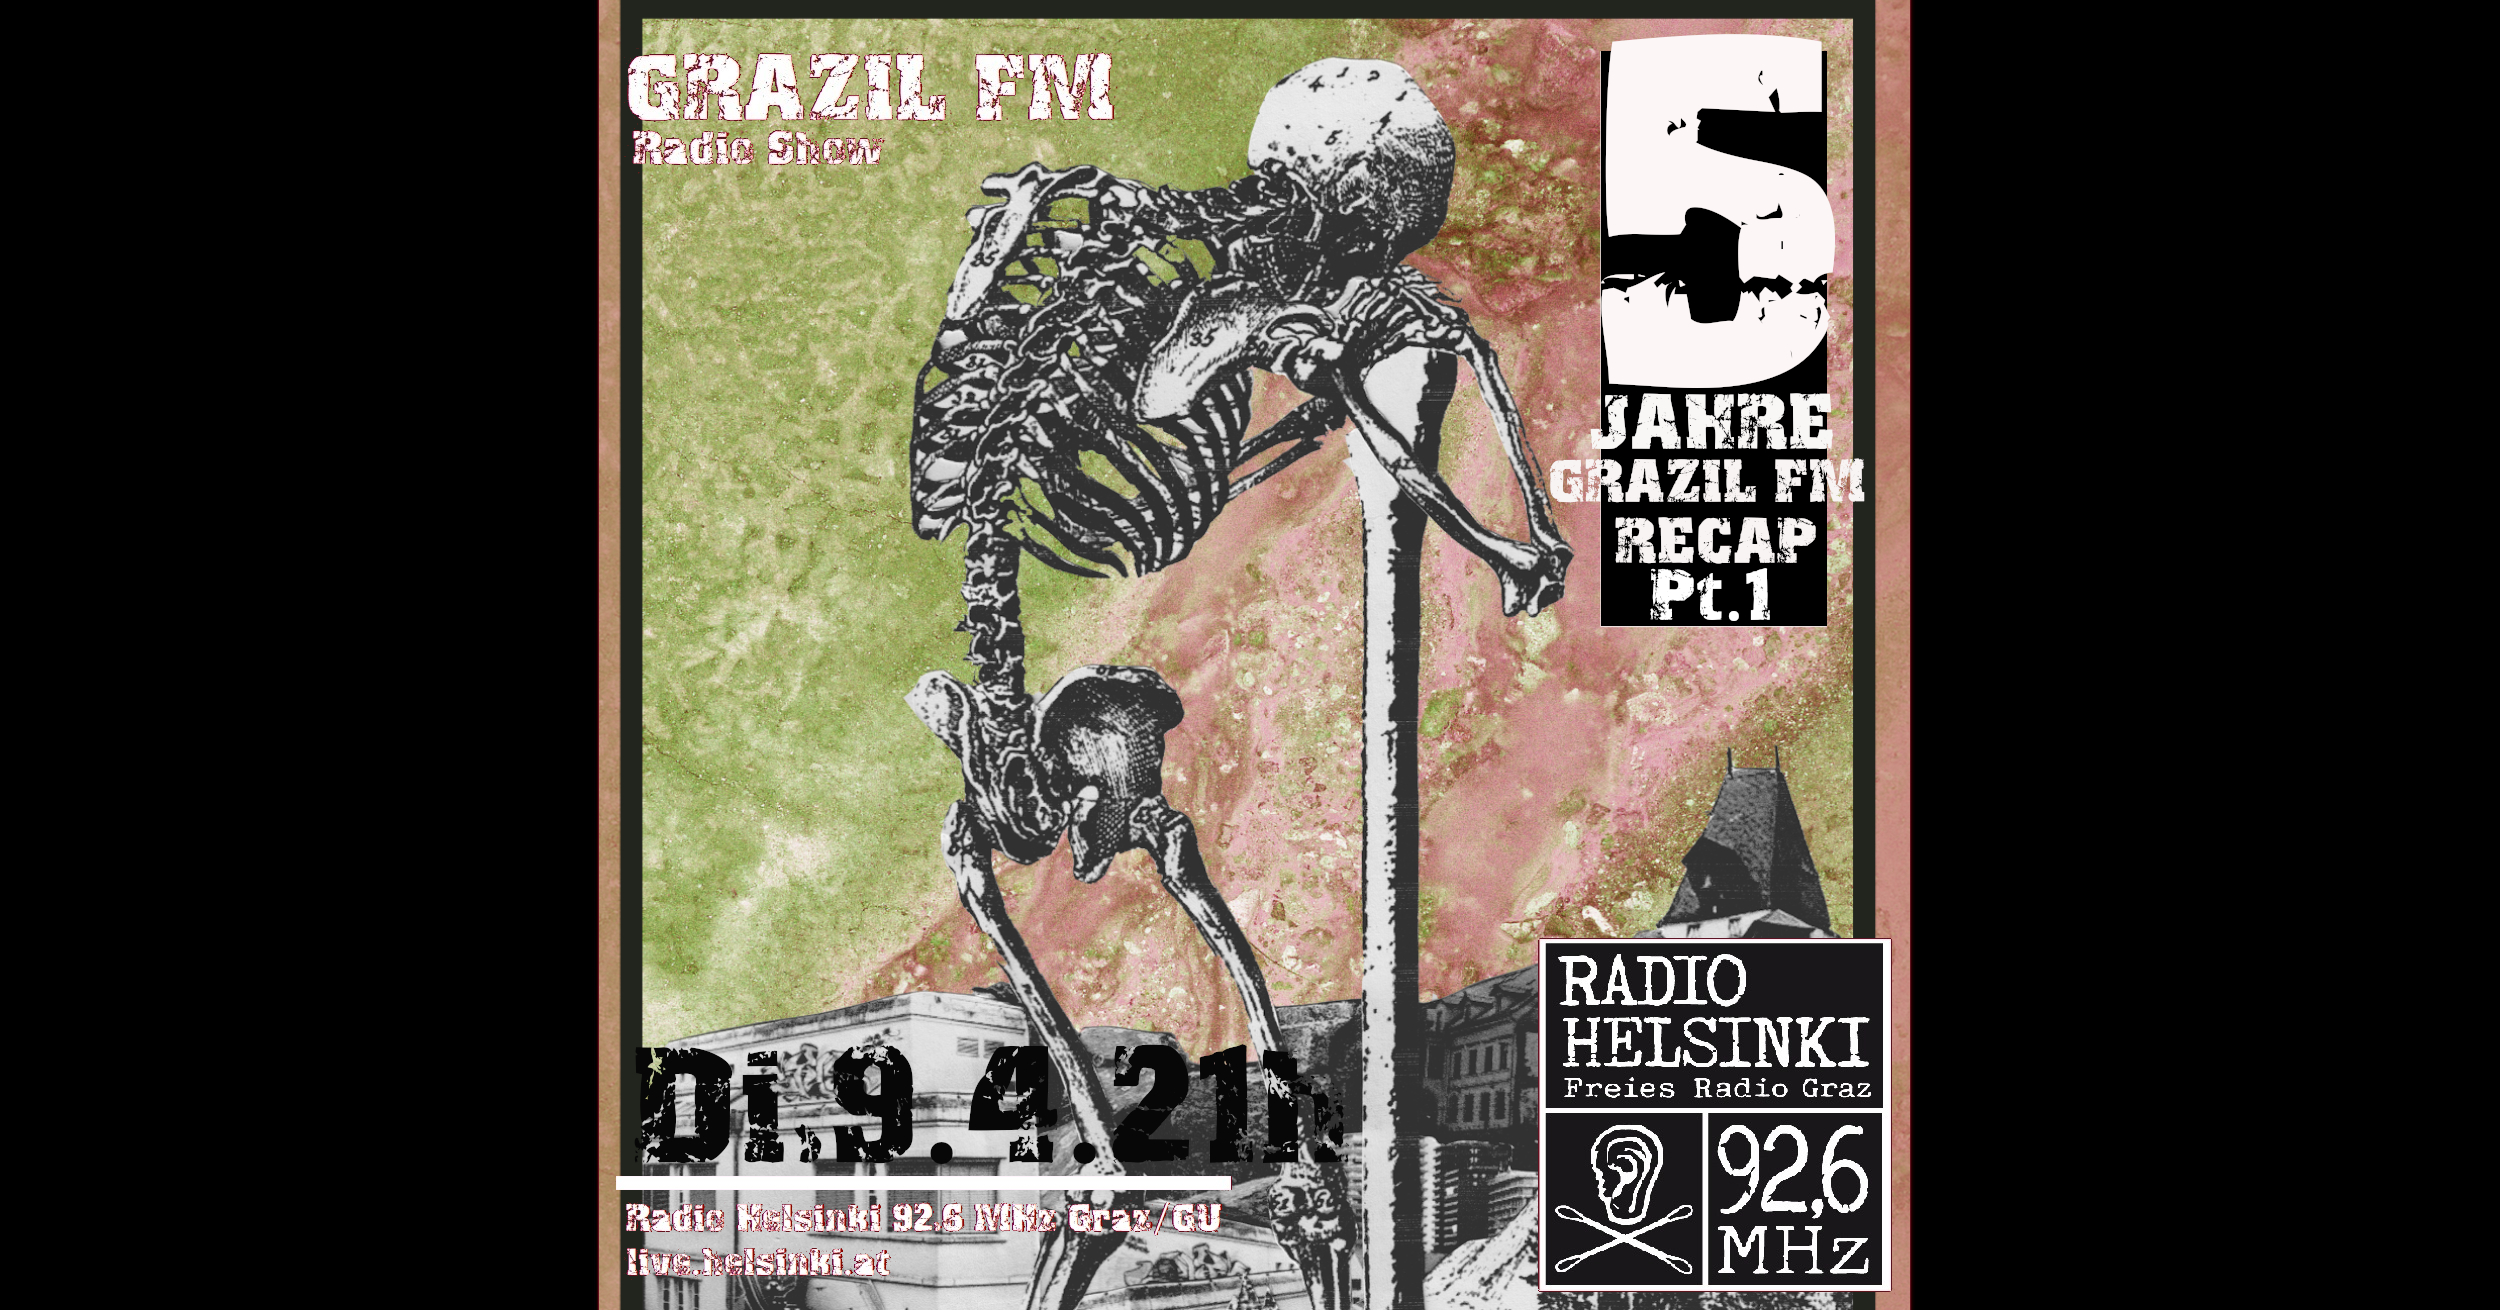 5 Jahre grazil FM - Potence live Radio Helsinki Cle Pecher grazil Records